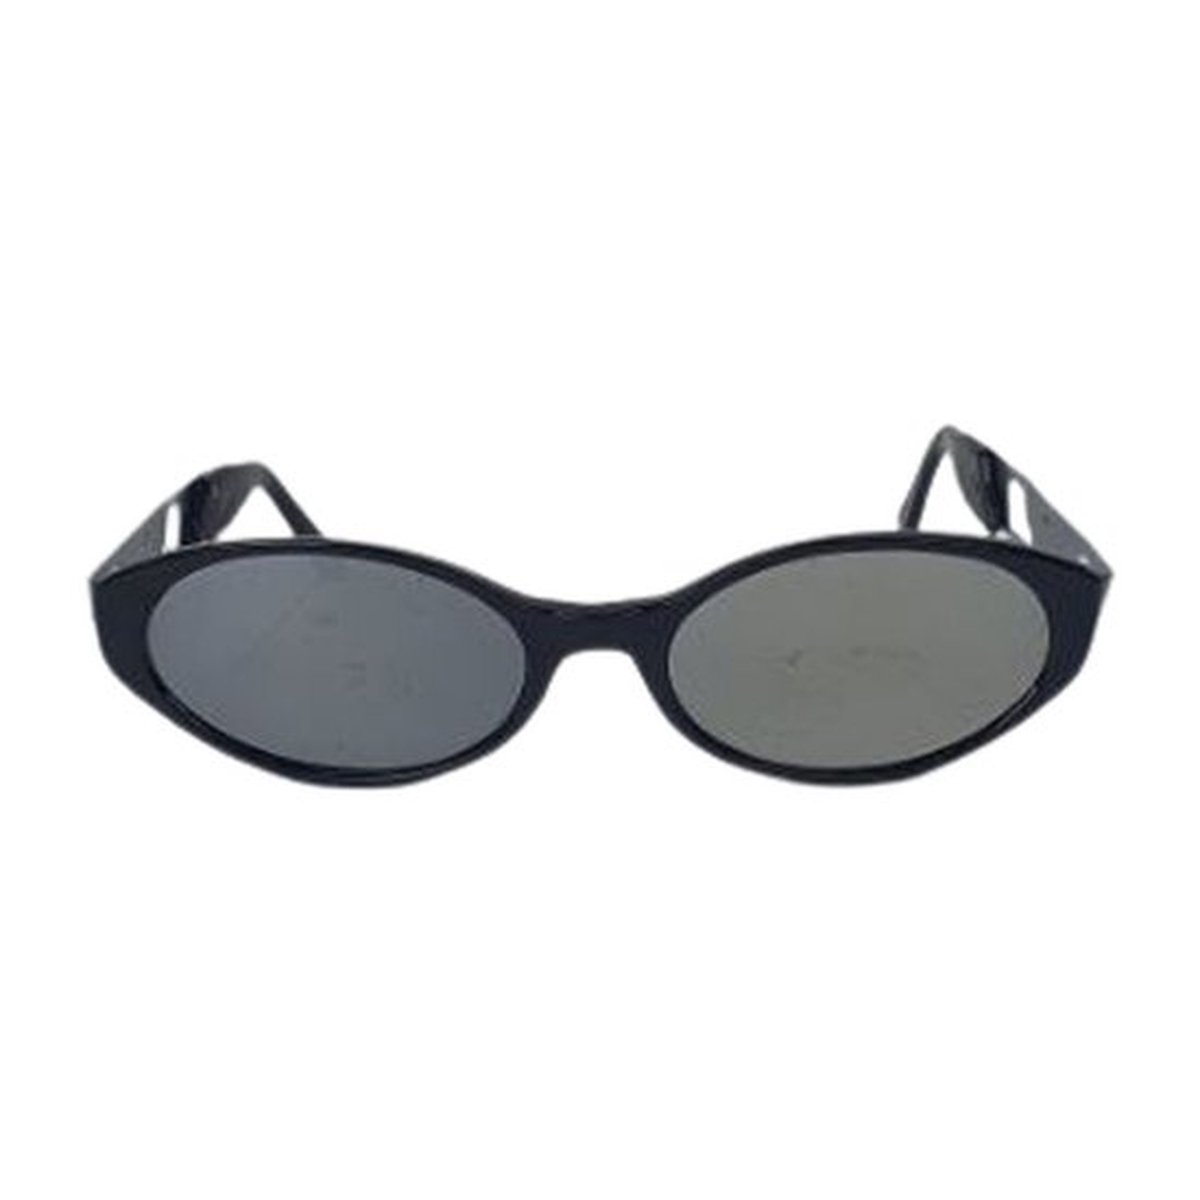 Zonnebril FRANKY - Bril - UV 400 - Zwart - Ovaal Model - Rond - Shades - Unisex - Werk - Vakantie